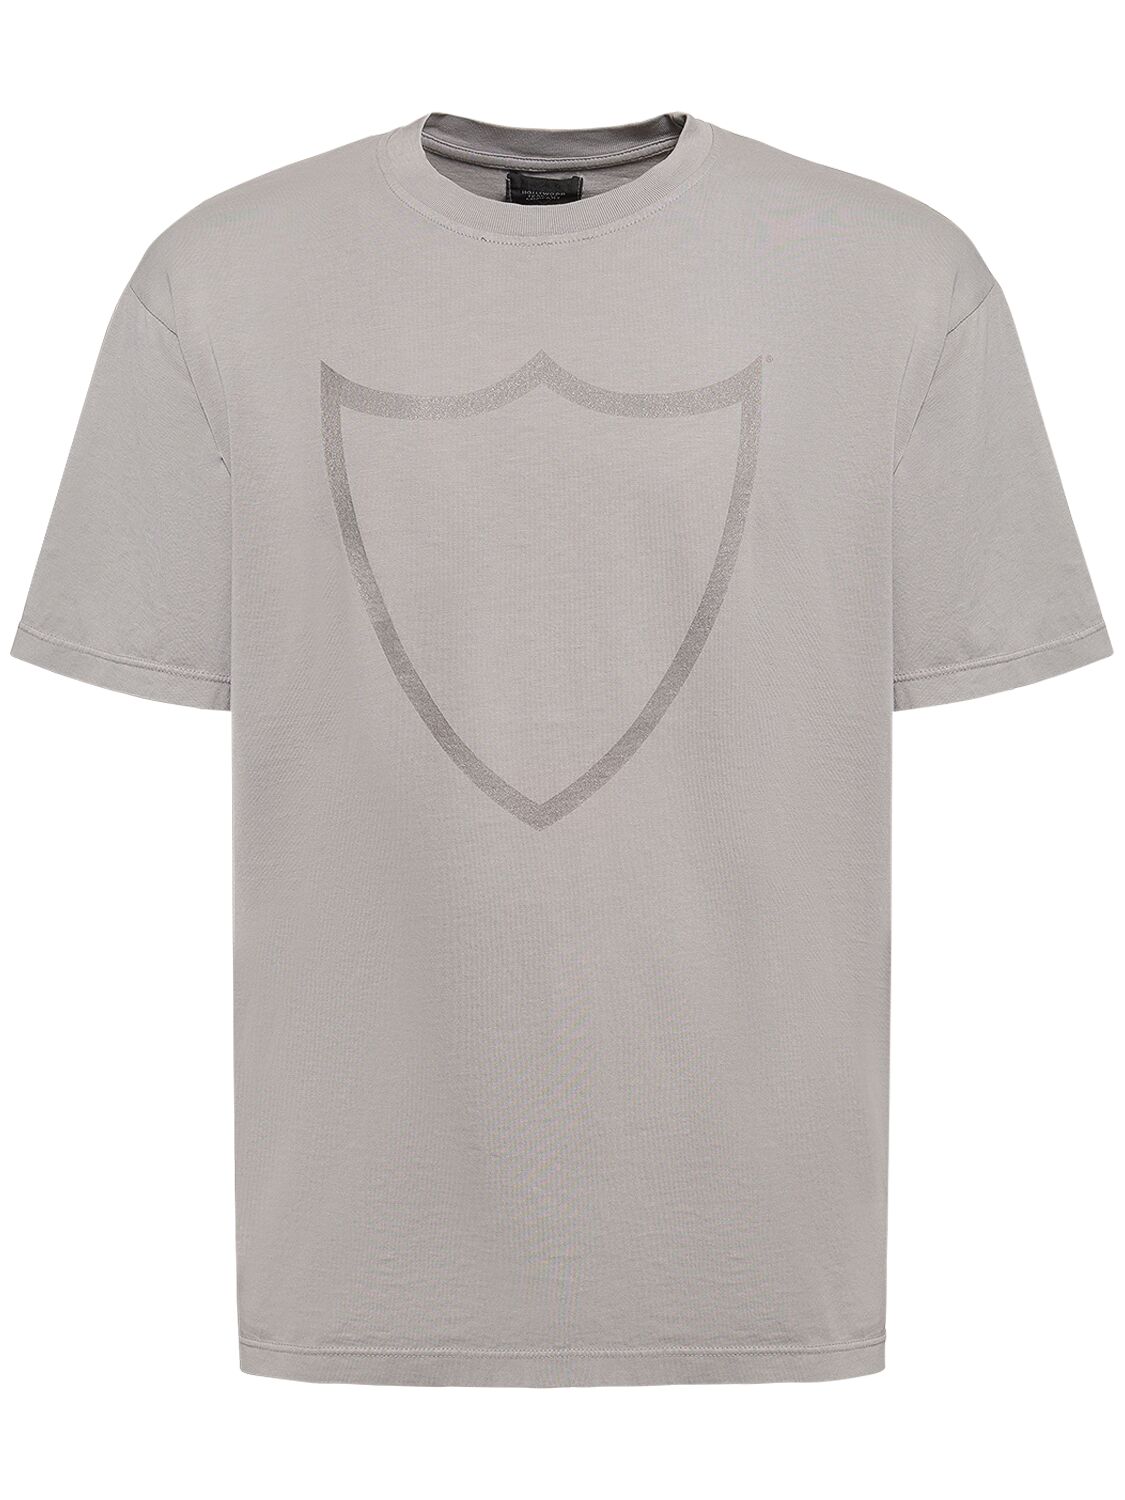 Htc Los Angeles Logo Print Cotton Jersey T-shirt In Light Grey